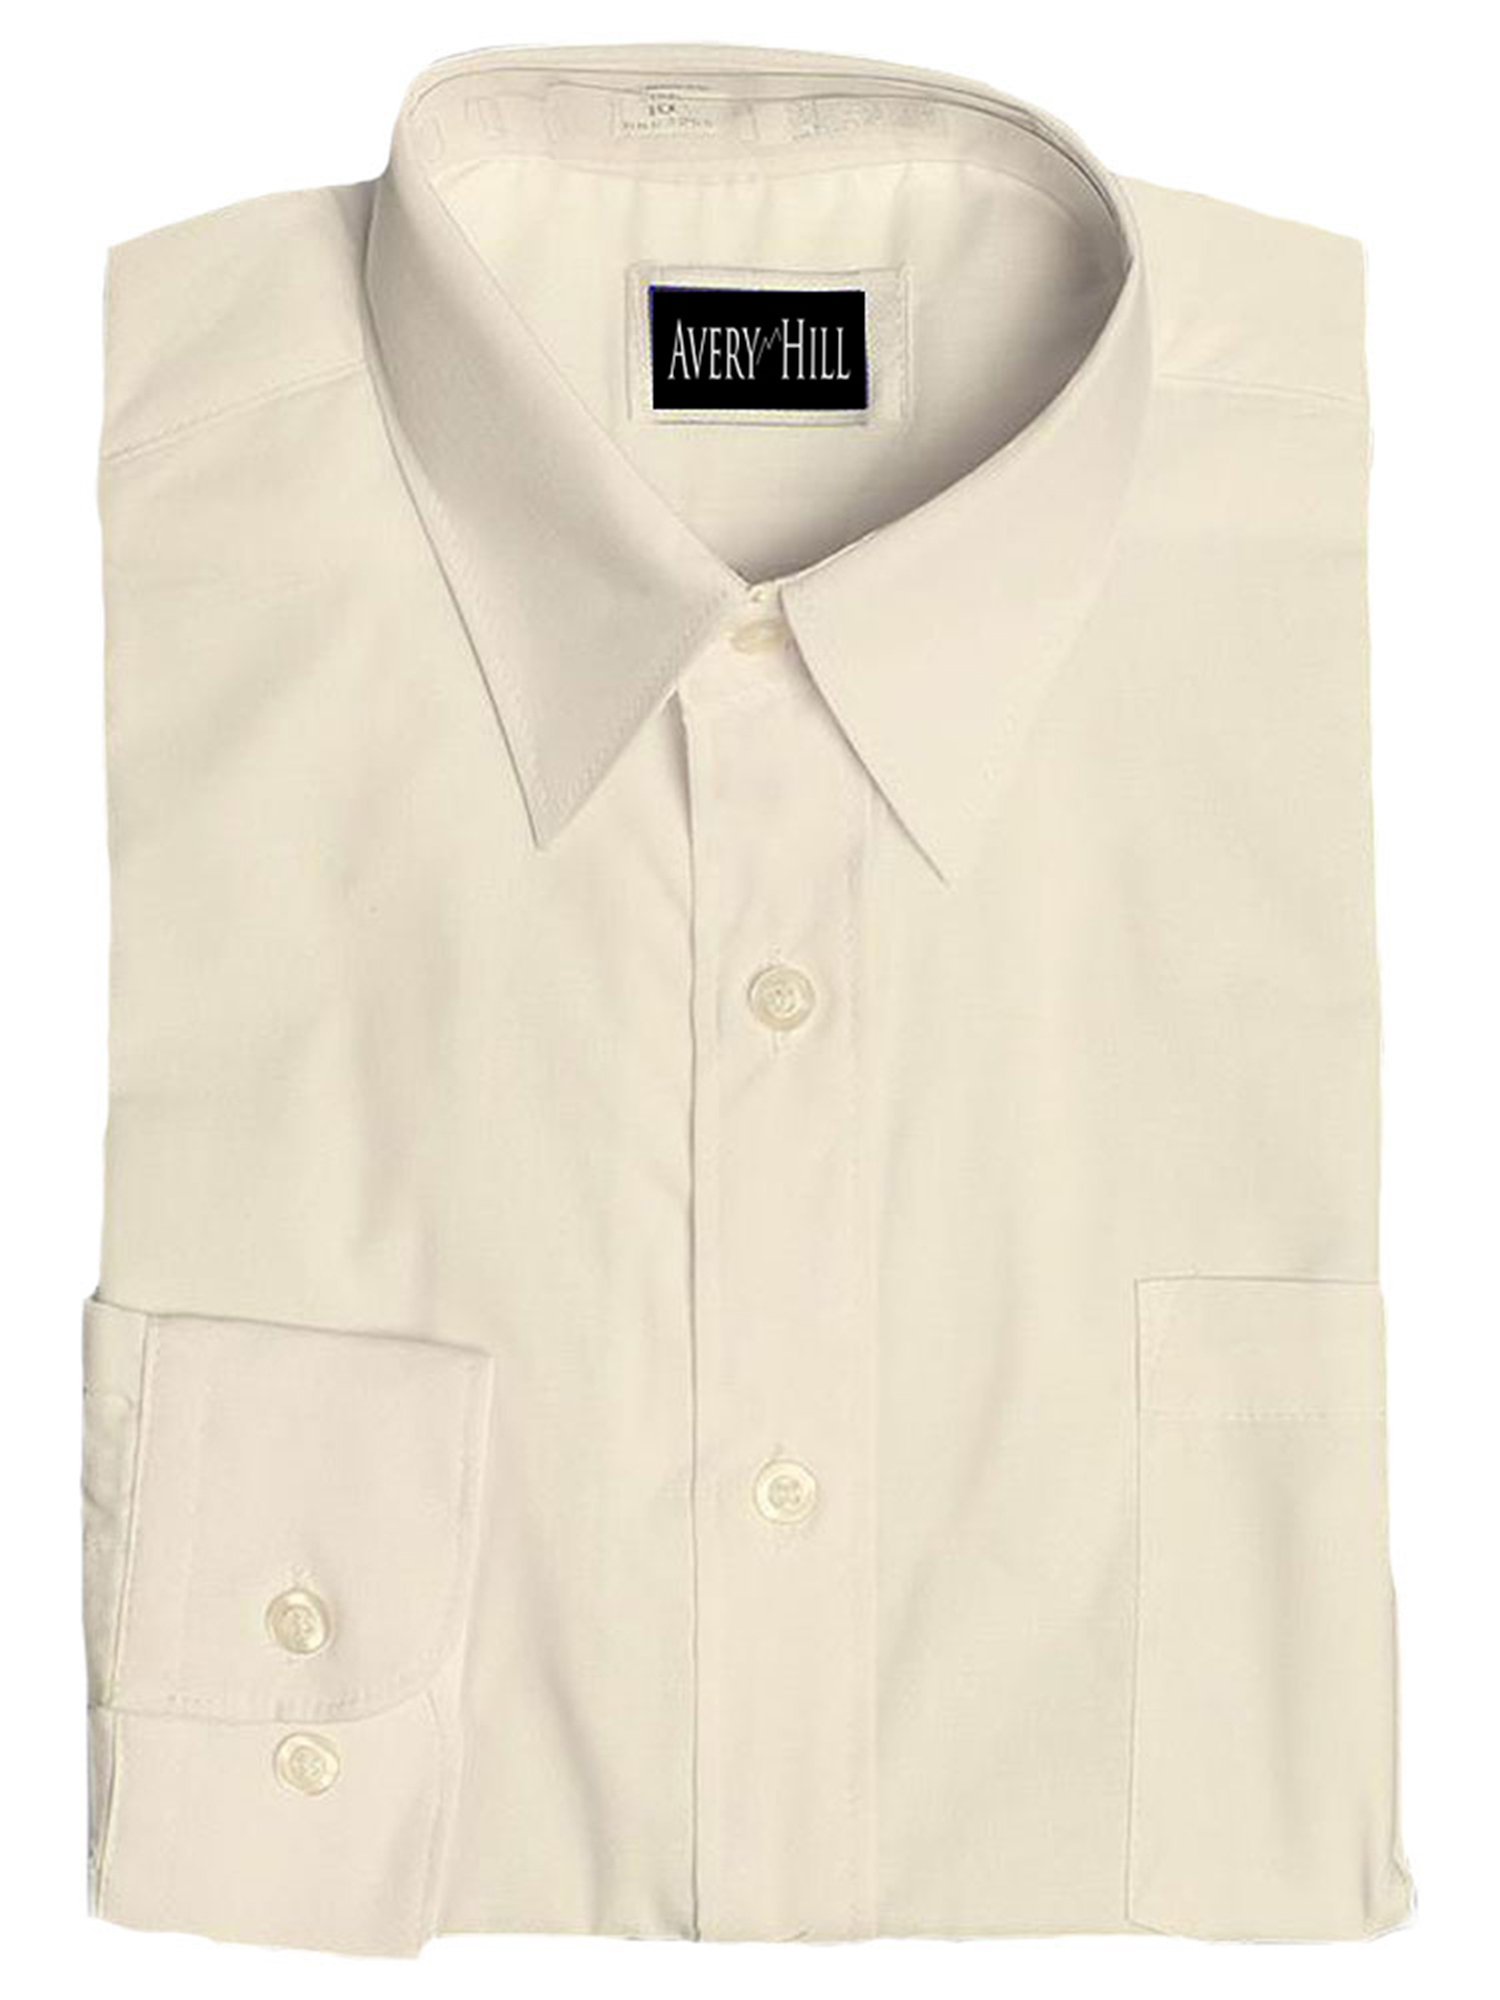 Boys White or Ivory Long Sleeve Wrinkle Resistant Dress Shirt IV 2T